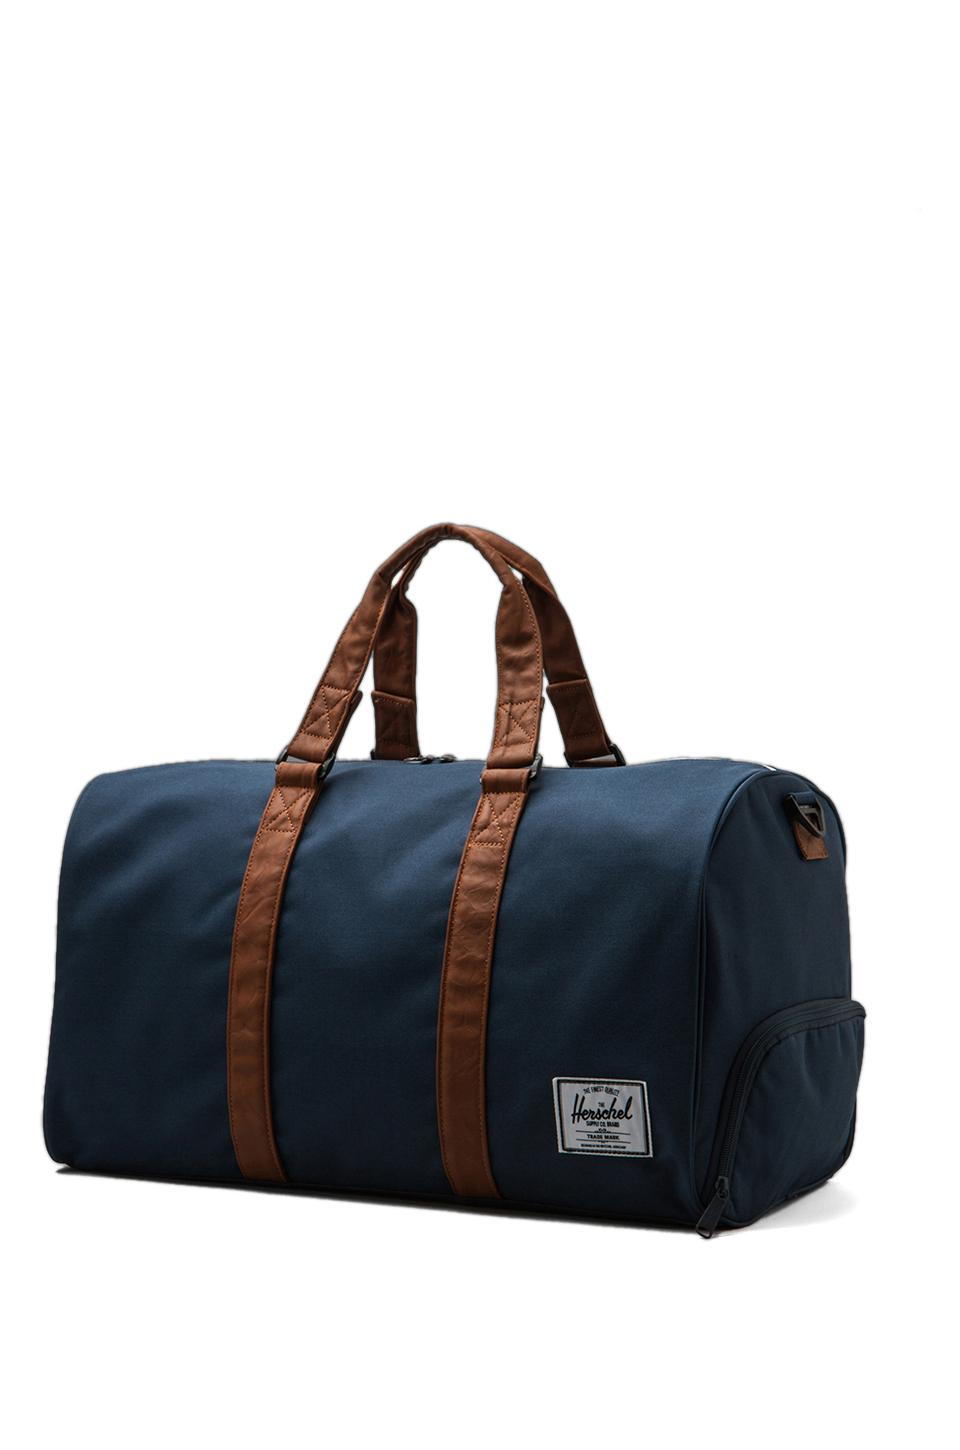 Lyst - Herschel Supply Co. Novel Duffle Bag in Blue